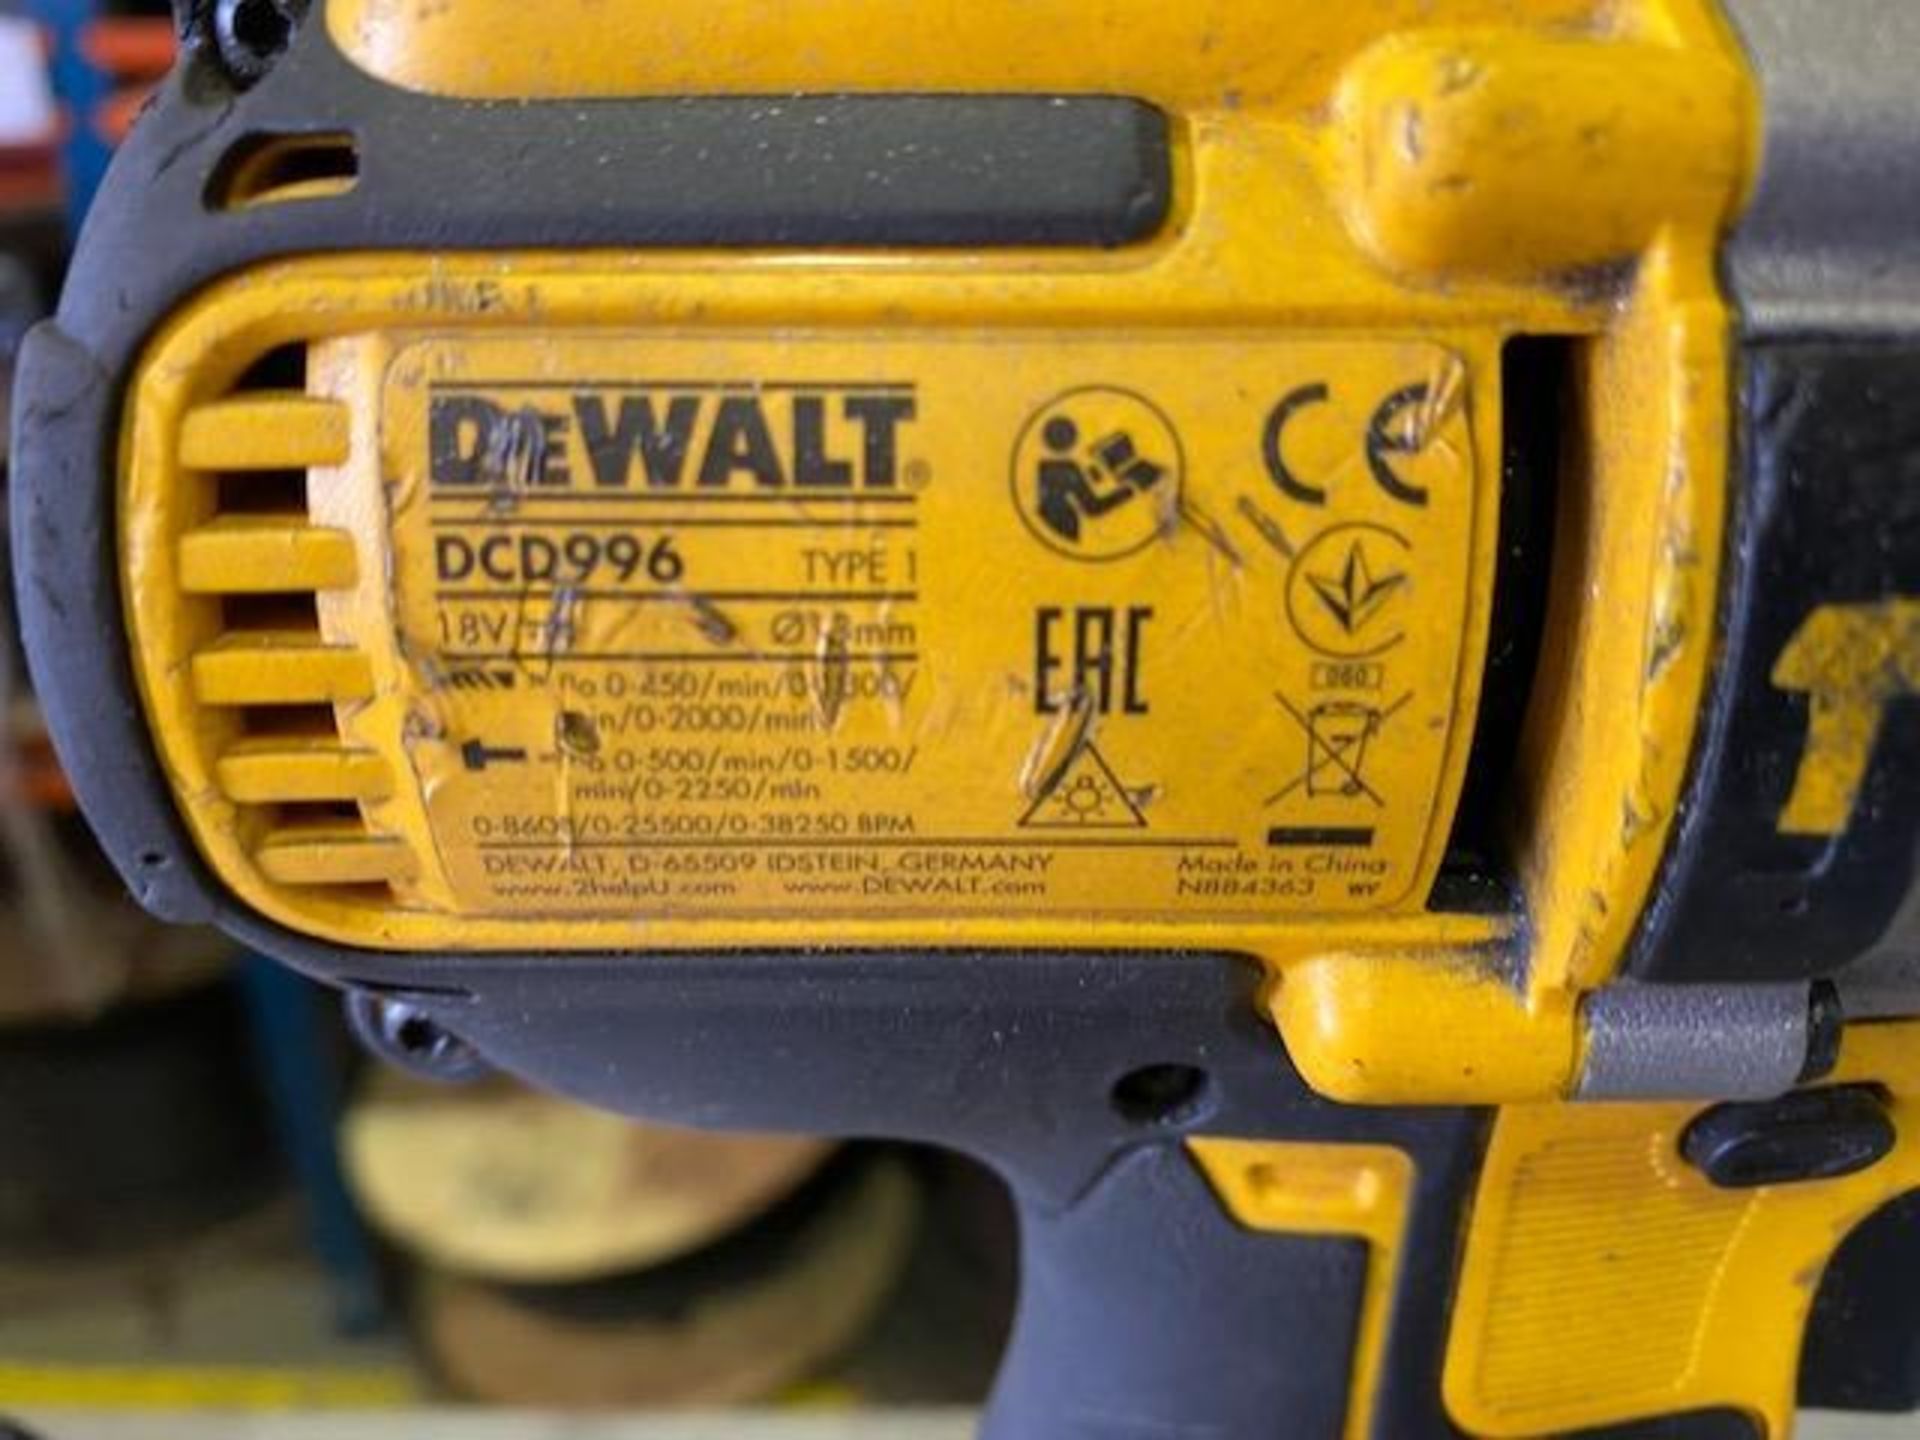 Dewalt DCD996 cordless hammer drill - Image 2 of 5